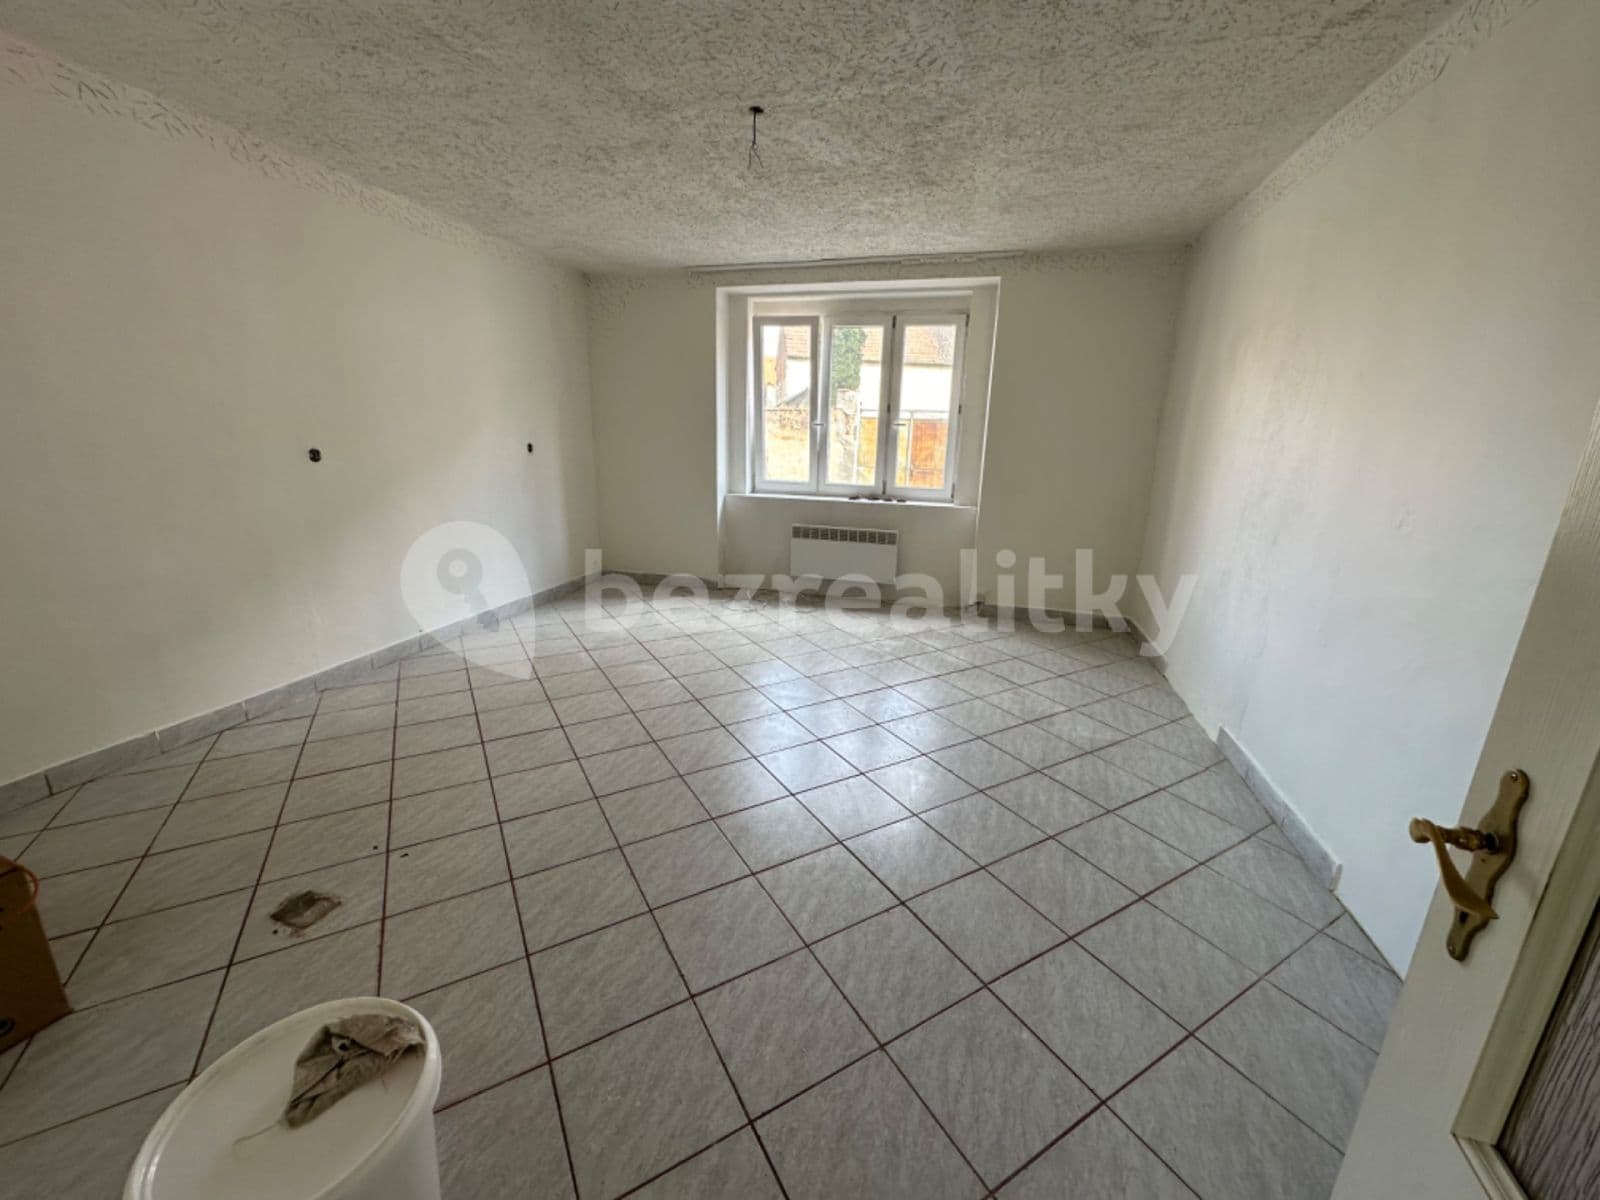 3 bedroom flat to rent, 87 m², Tylova, Černčice, Ústecký Region